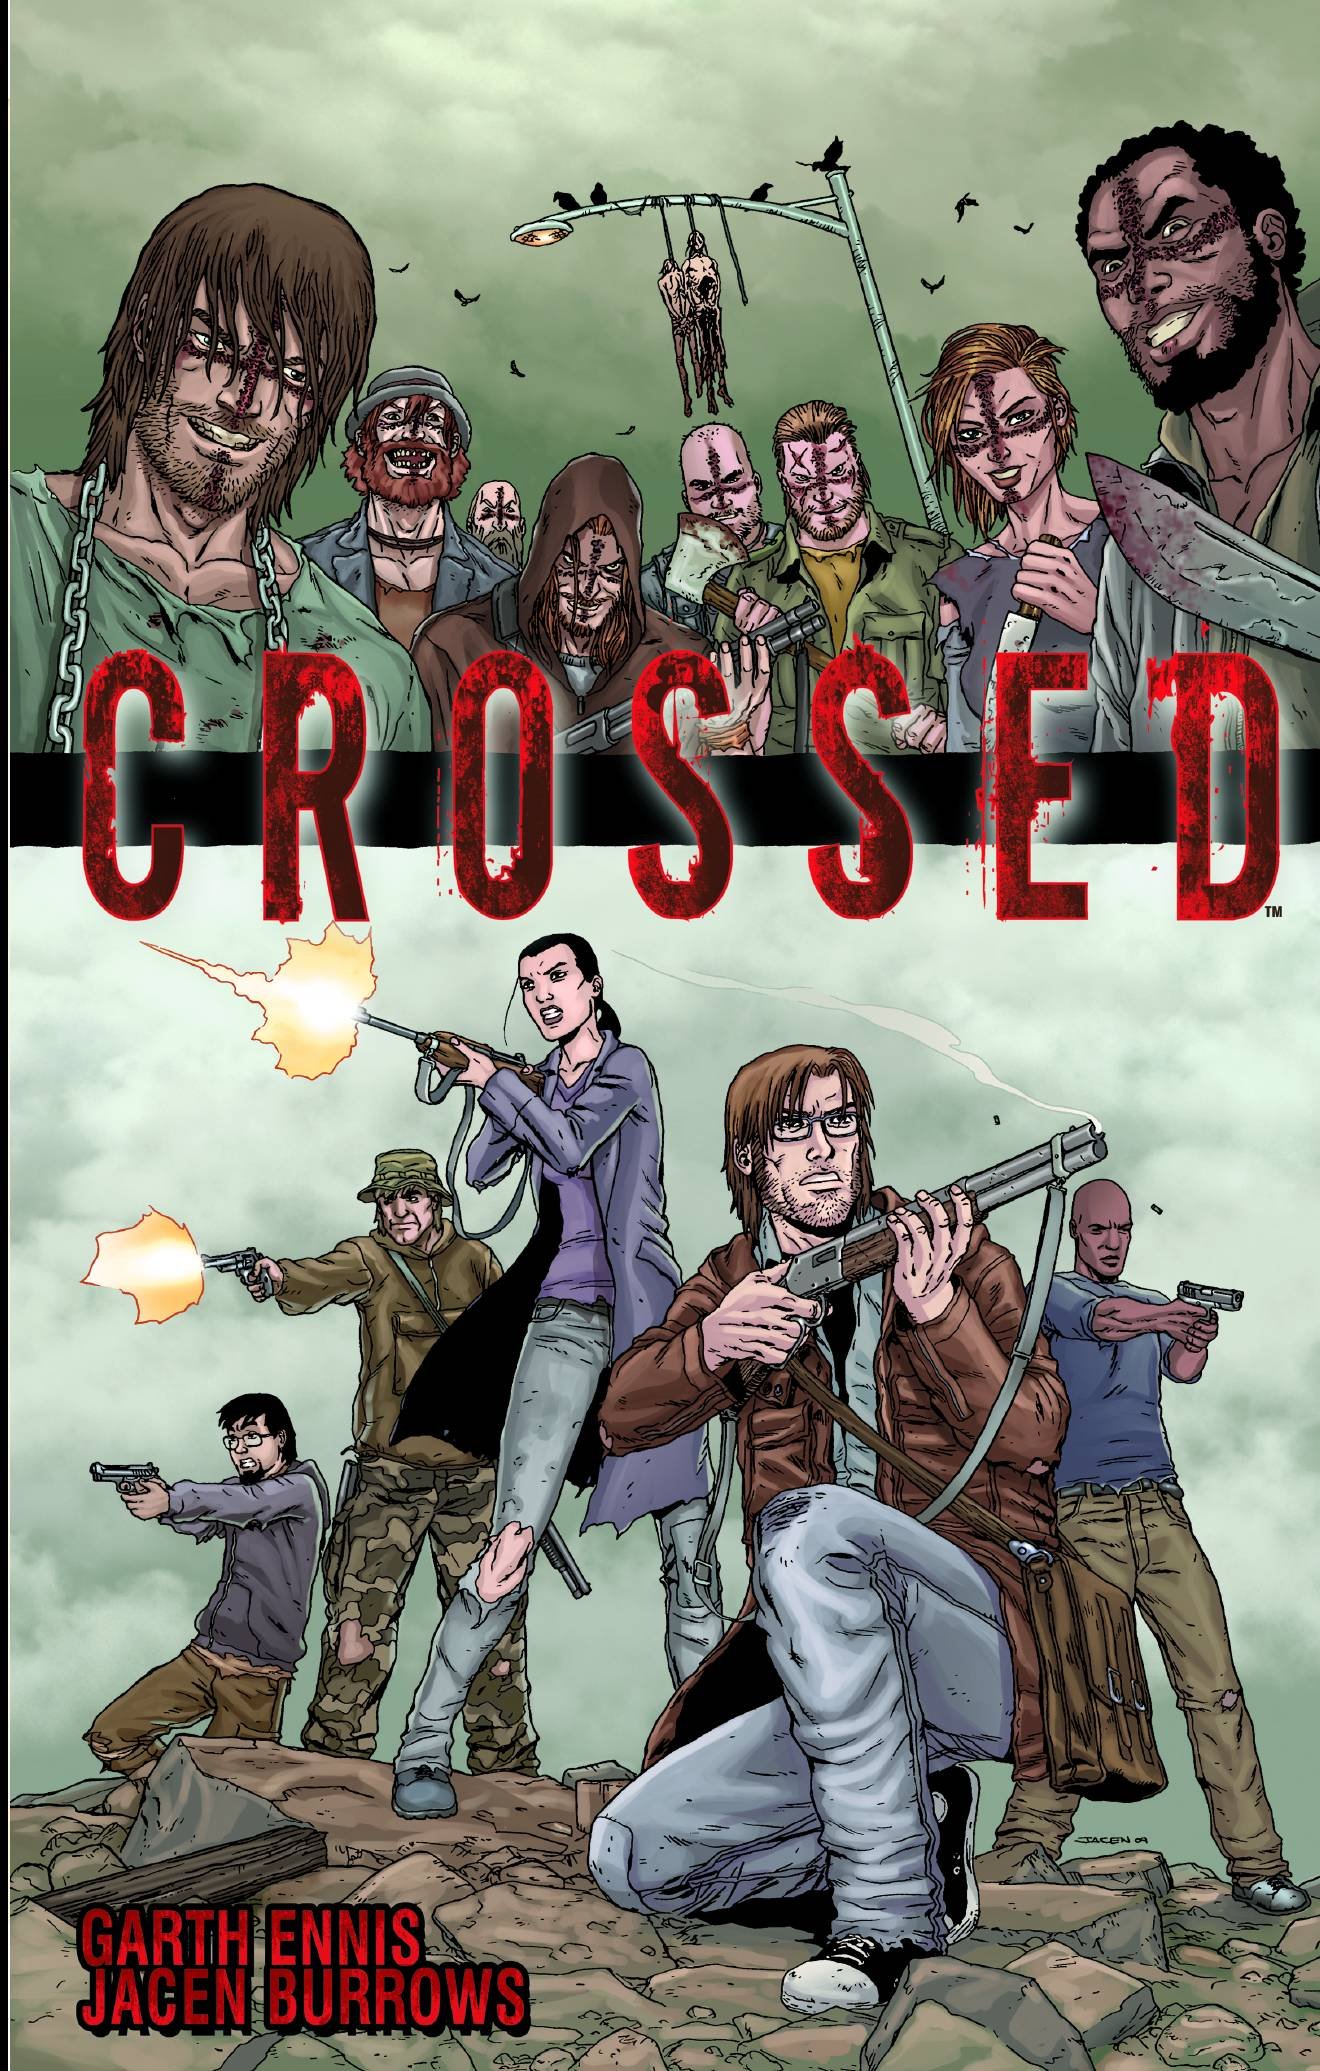 What the Crossed comic series looks like!